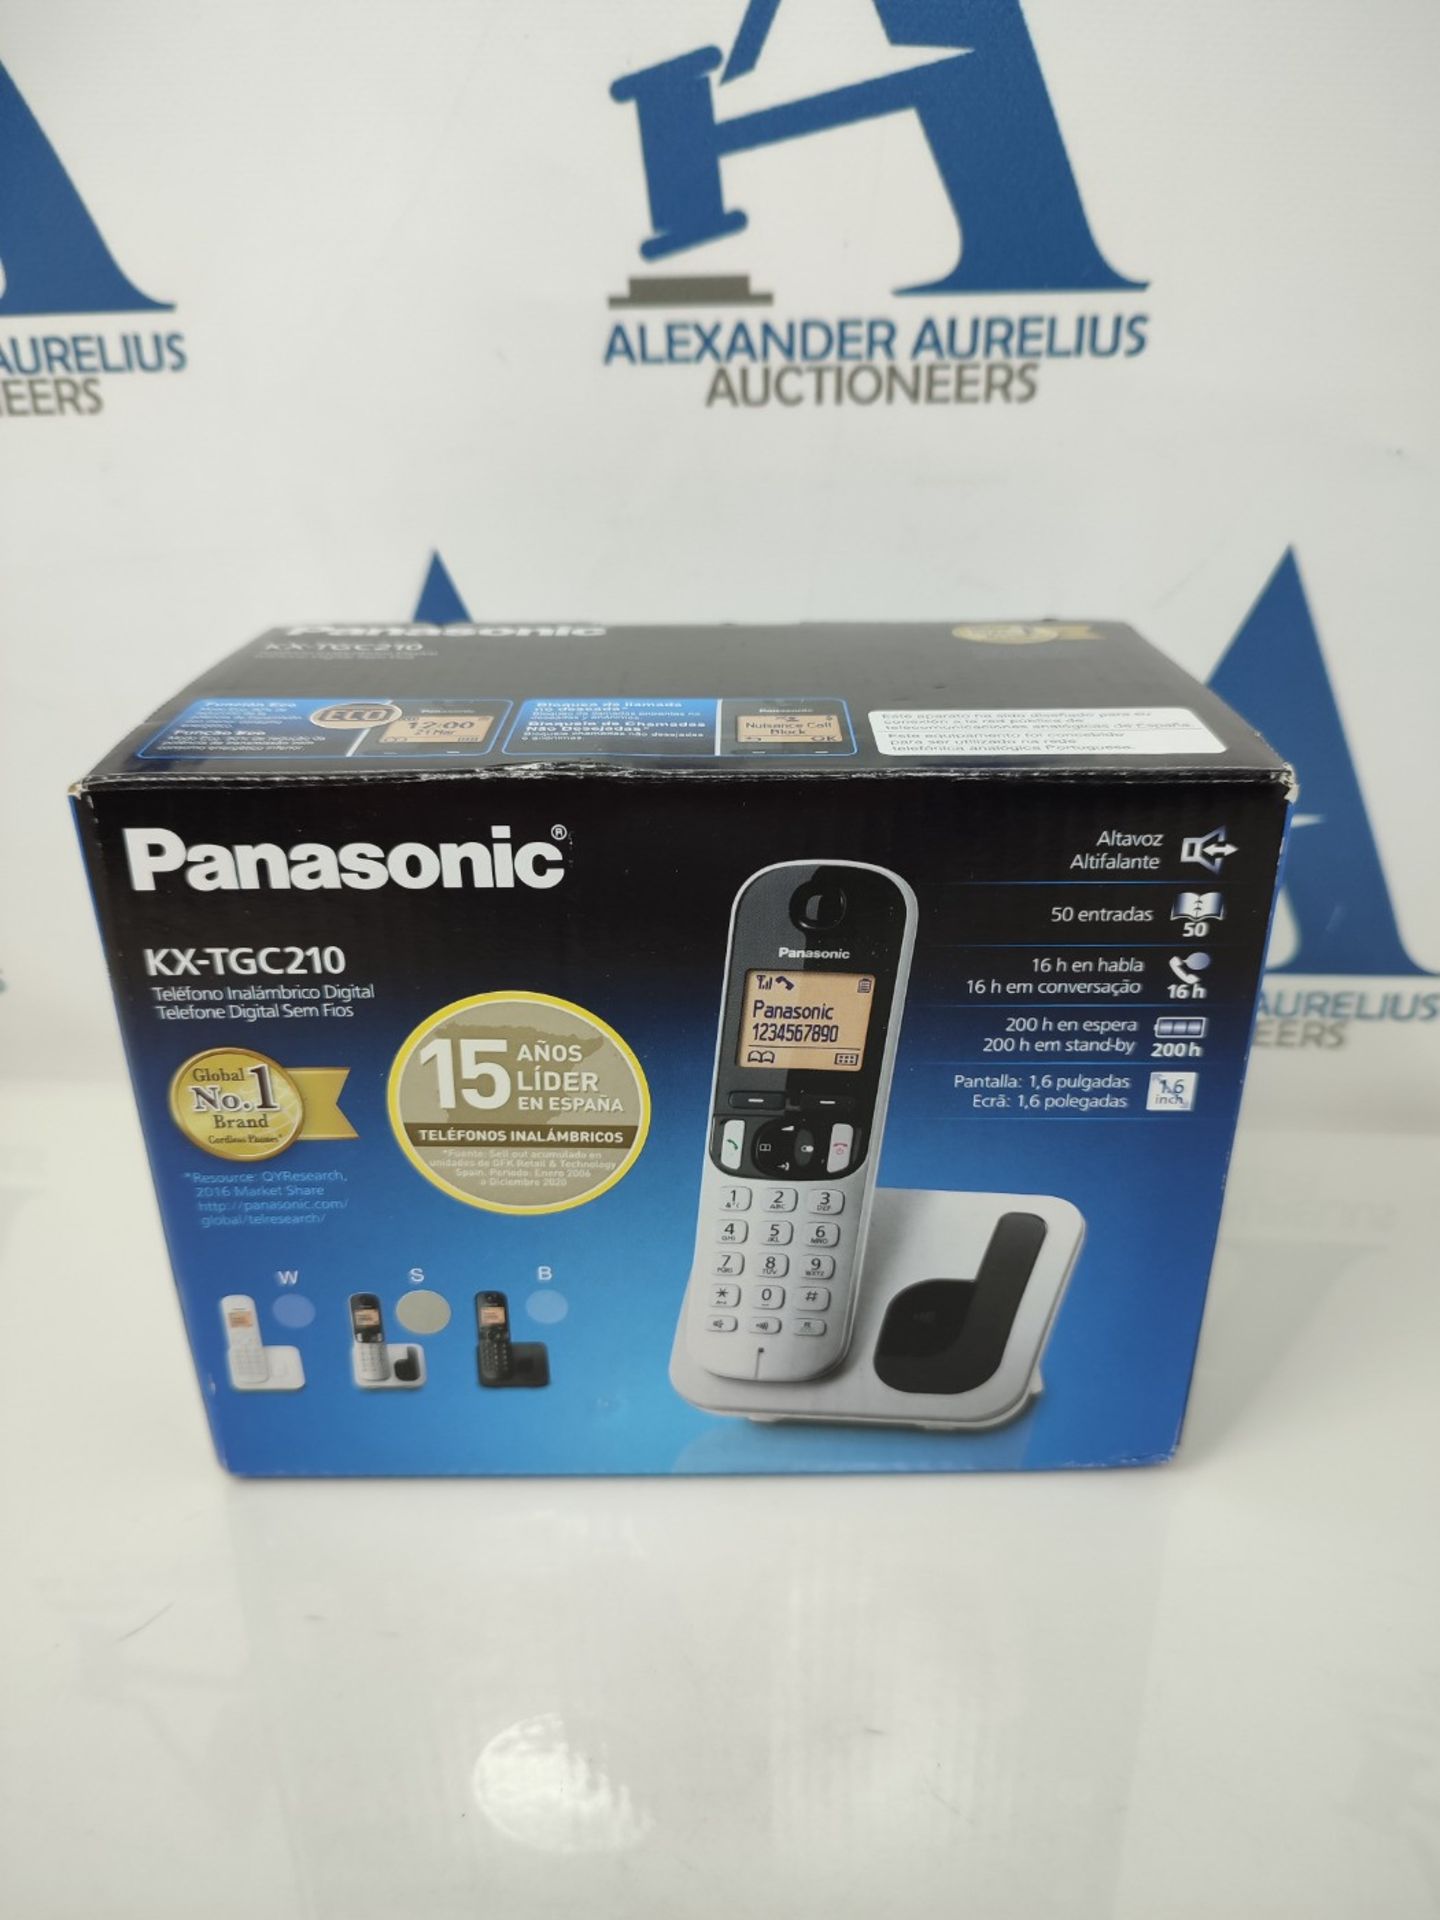 Panasonic Wireless landline telephone with LCD, caller ID, 50-number phone book, navig - Image 2 of 3